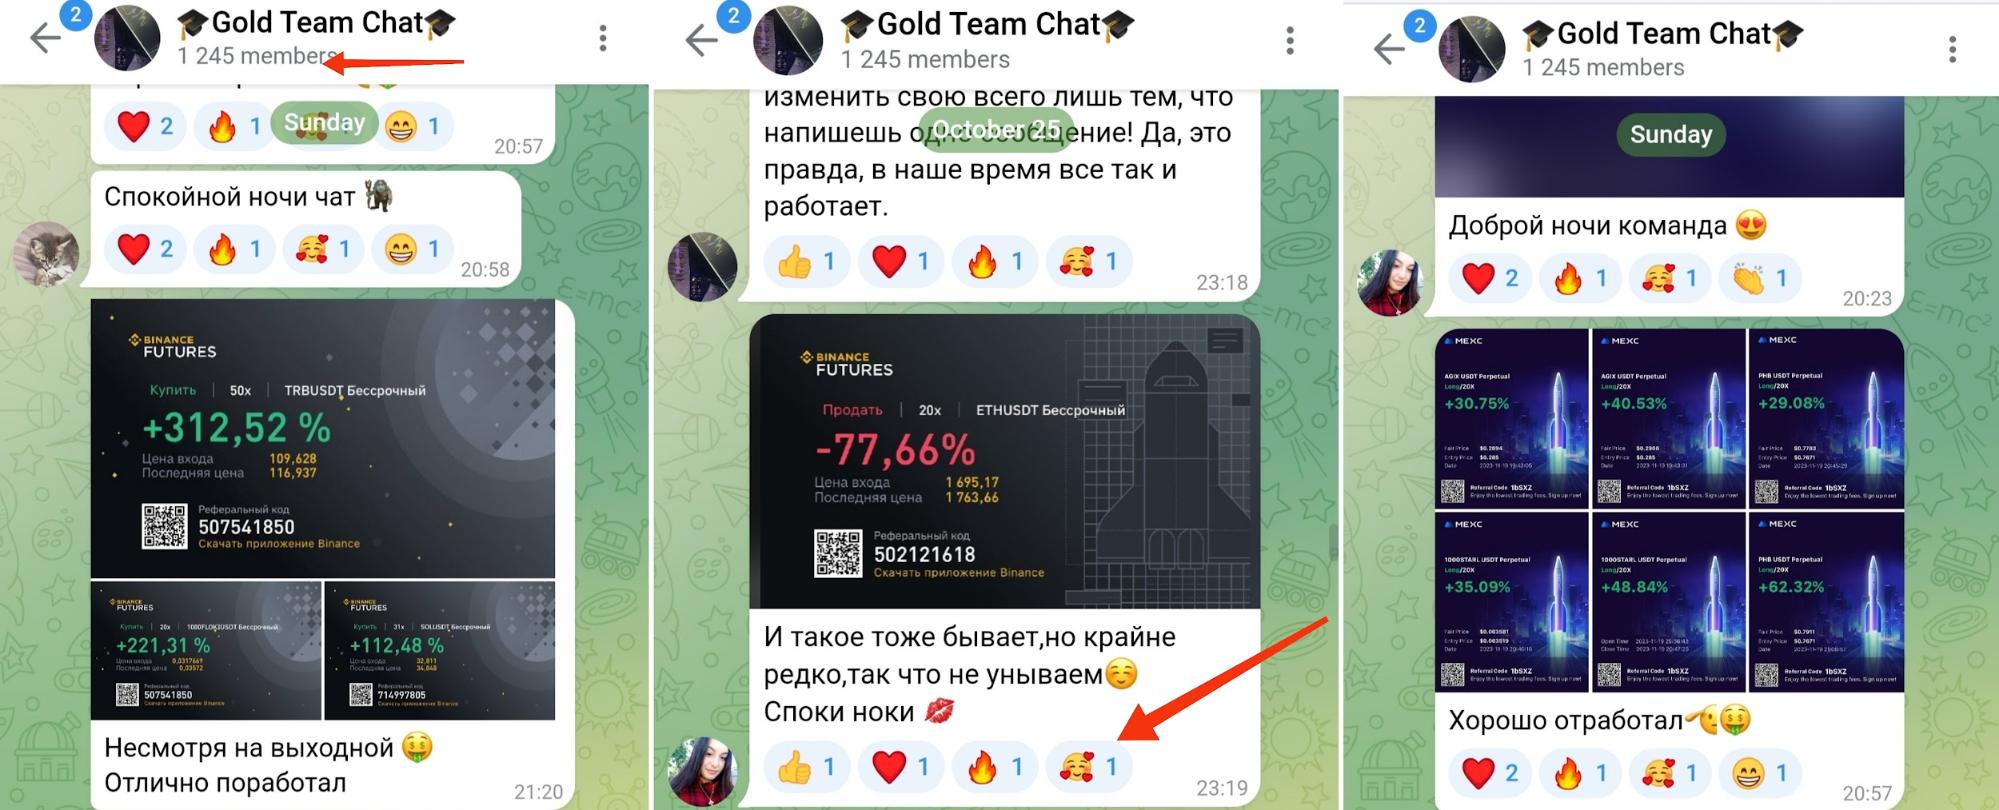 Gold Team Chat телеграм